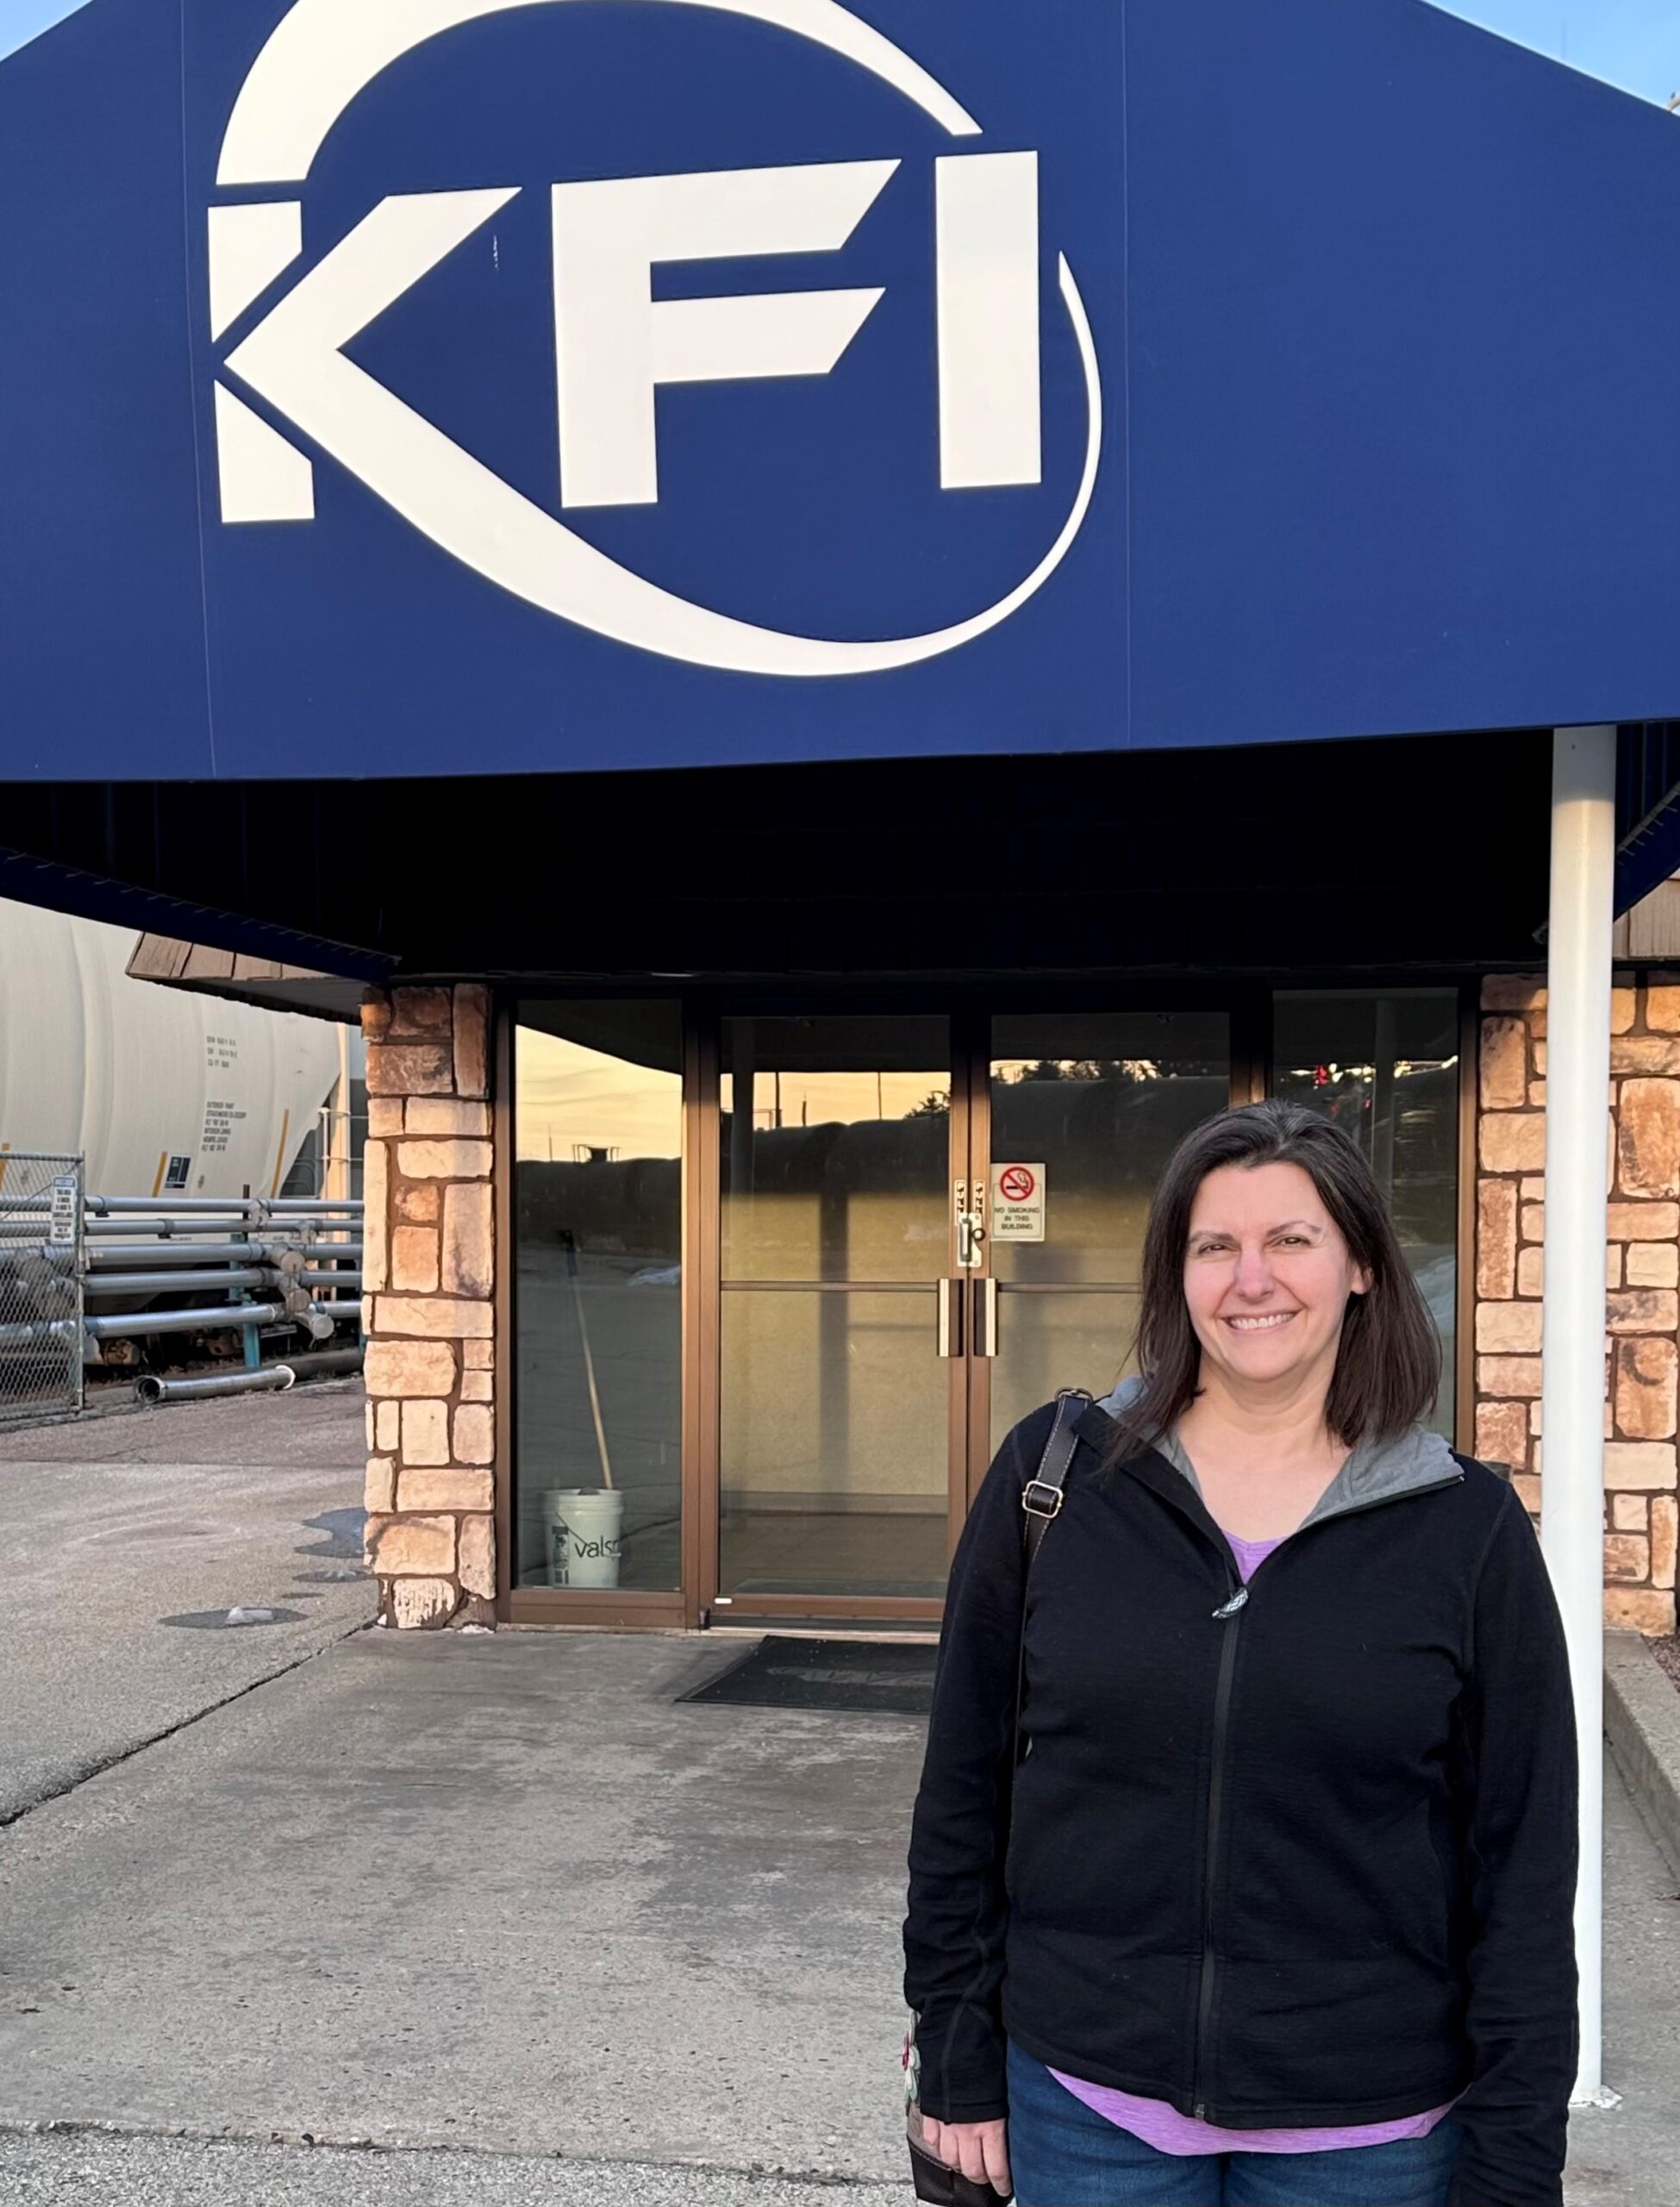 Meet the KFI Staff: Tanya Jacobs